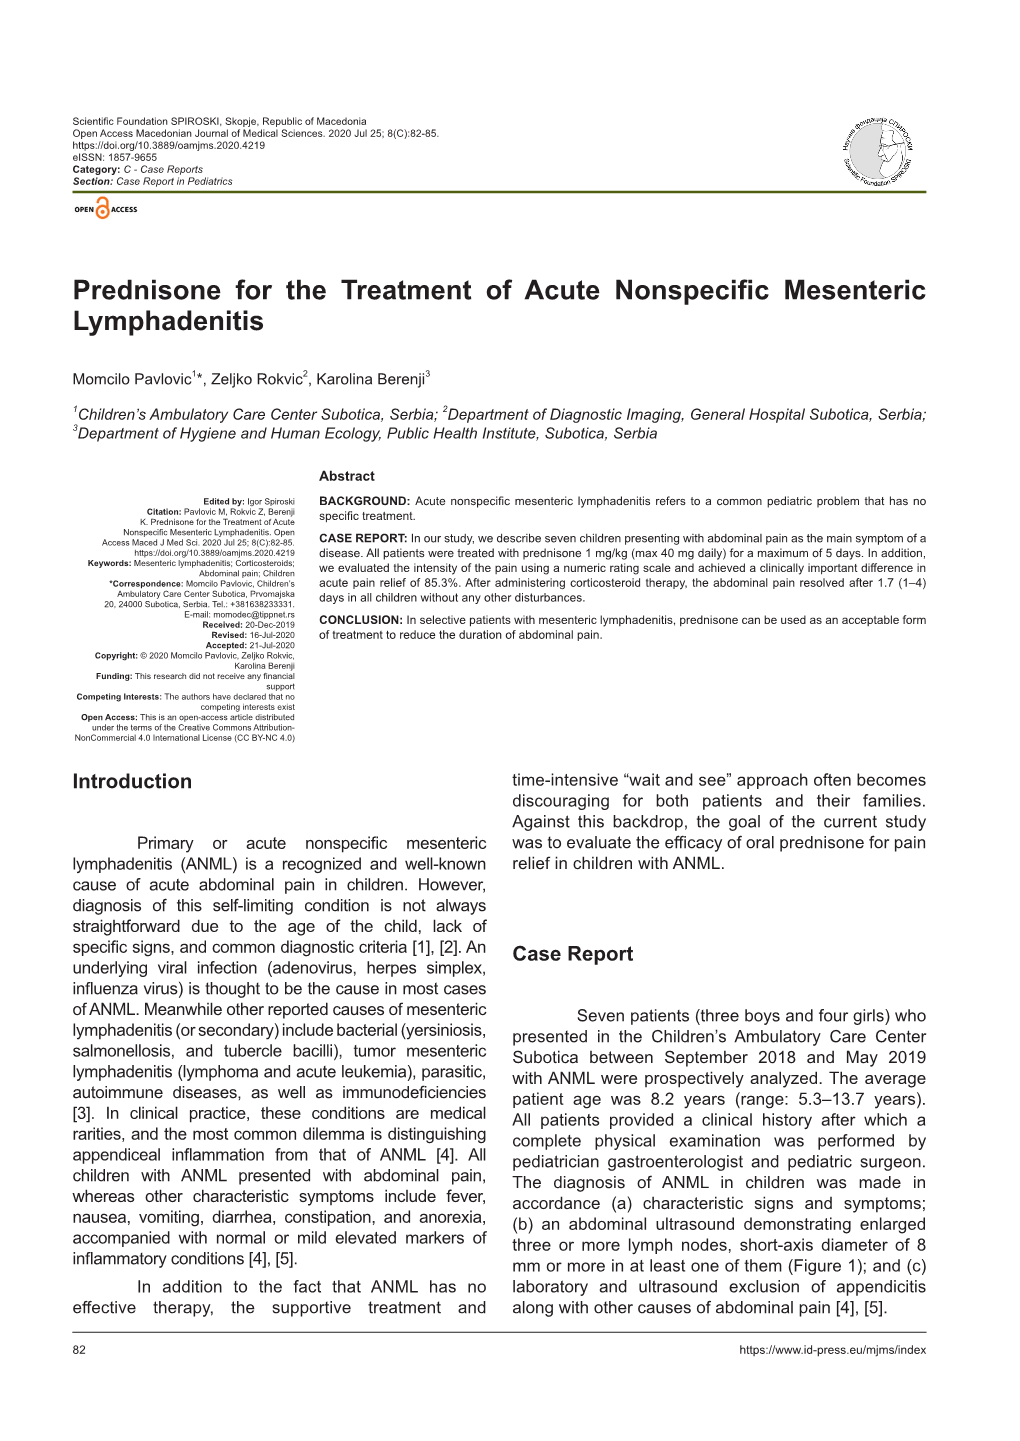 Prednisone for the Treatment of Acute Nonspecific Mesenteric Lymphadenitis